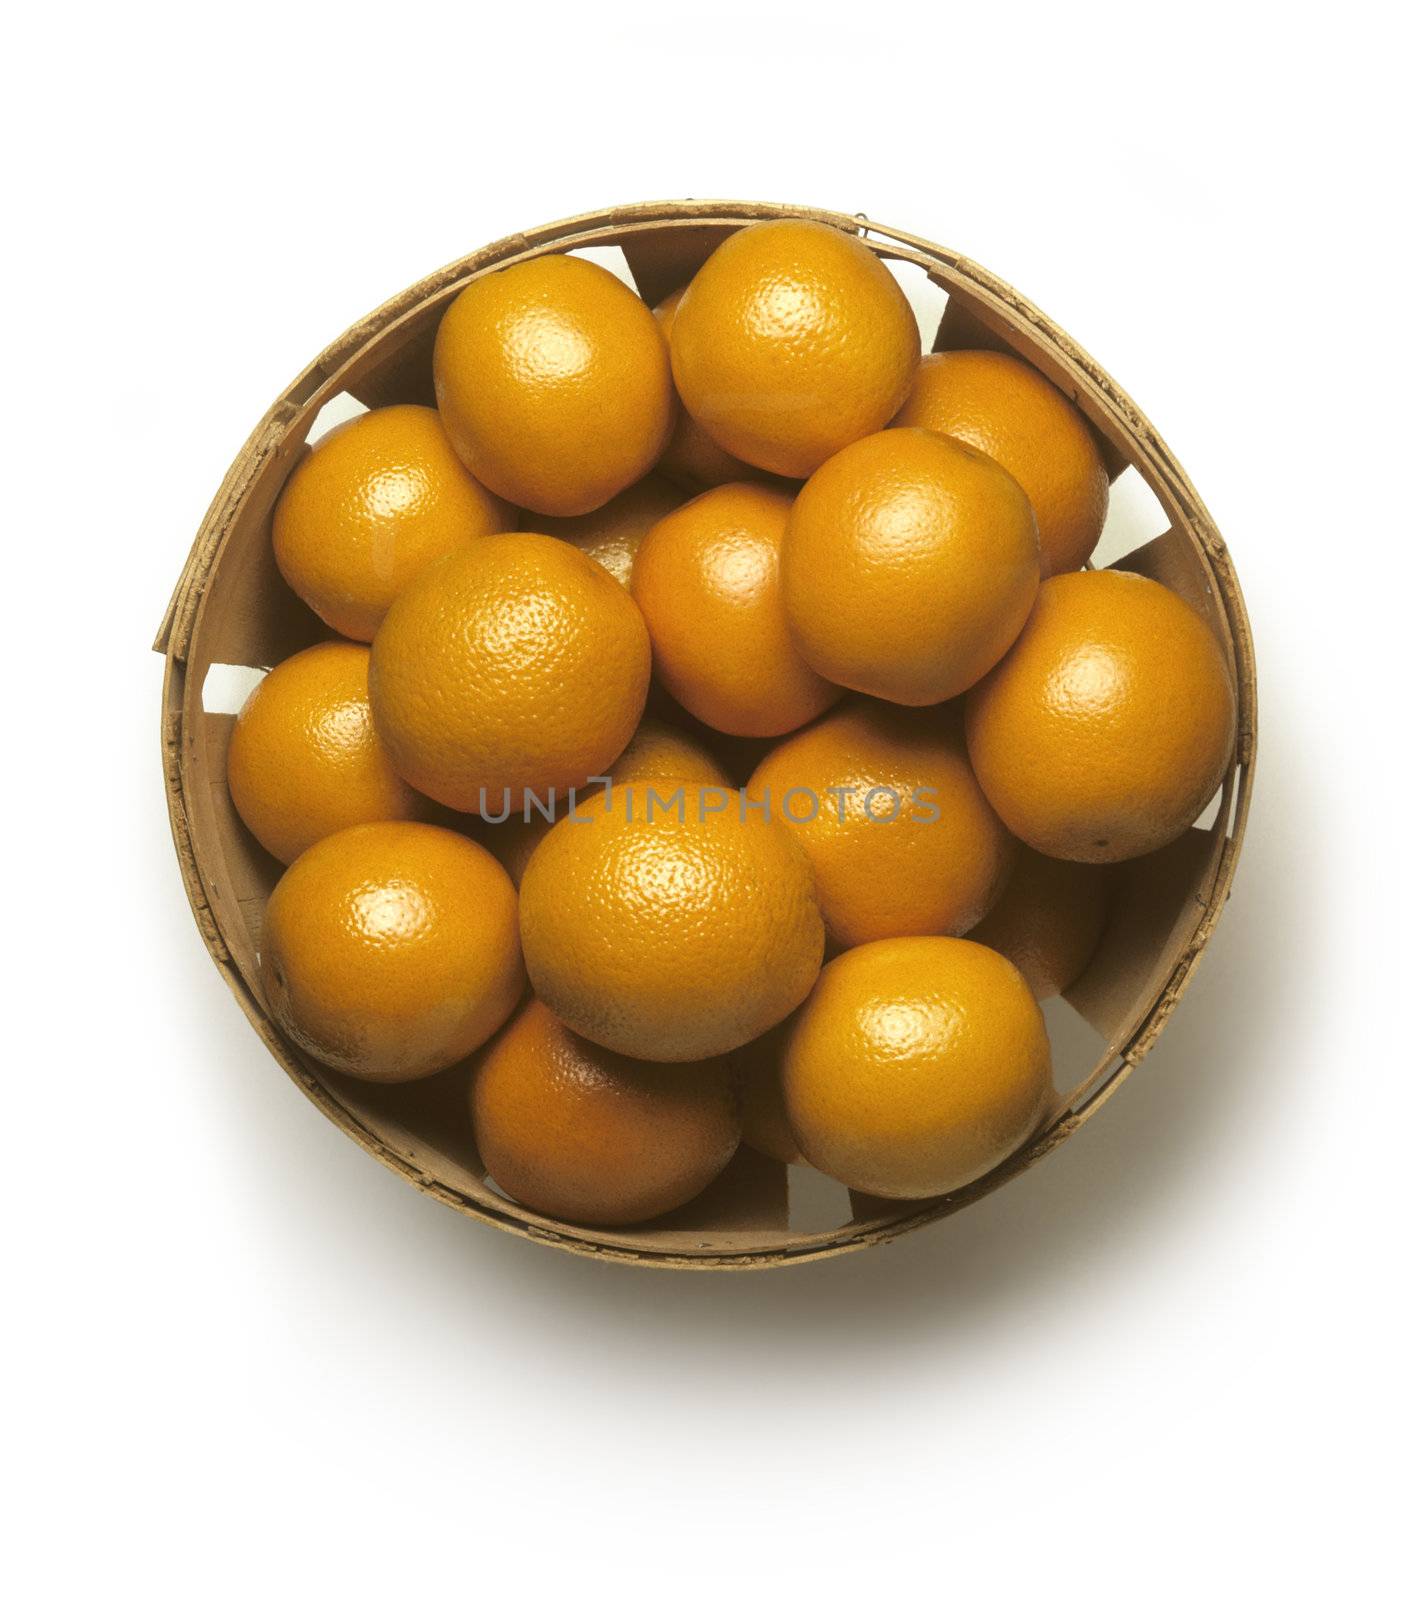 Basket of Oranges by Balefire9